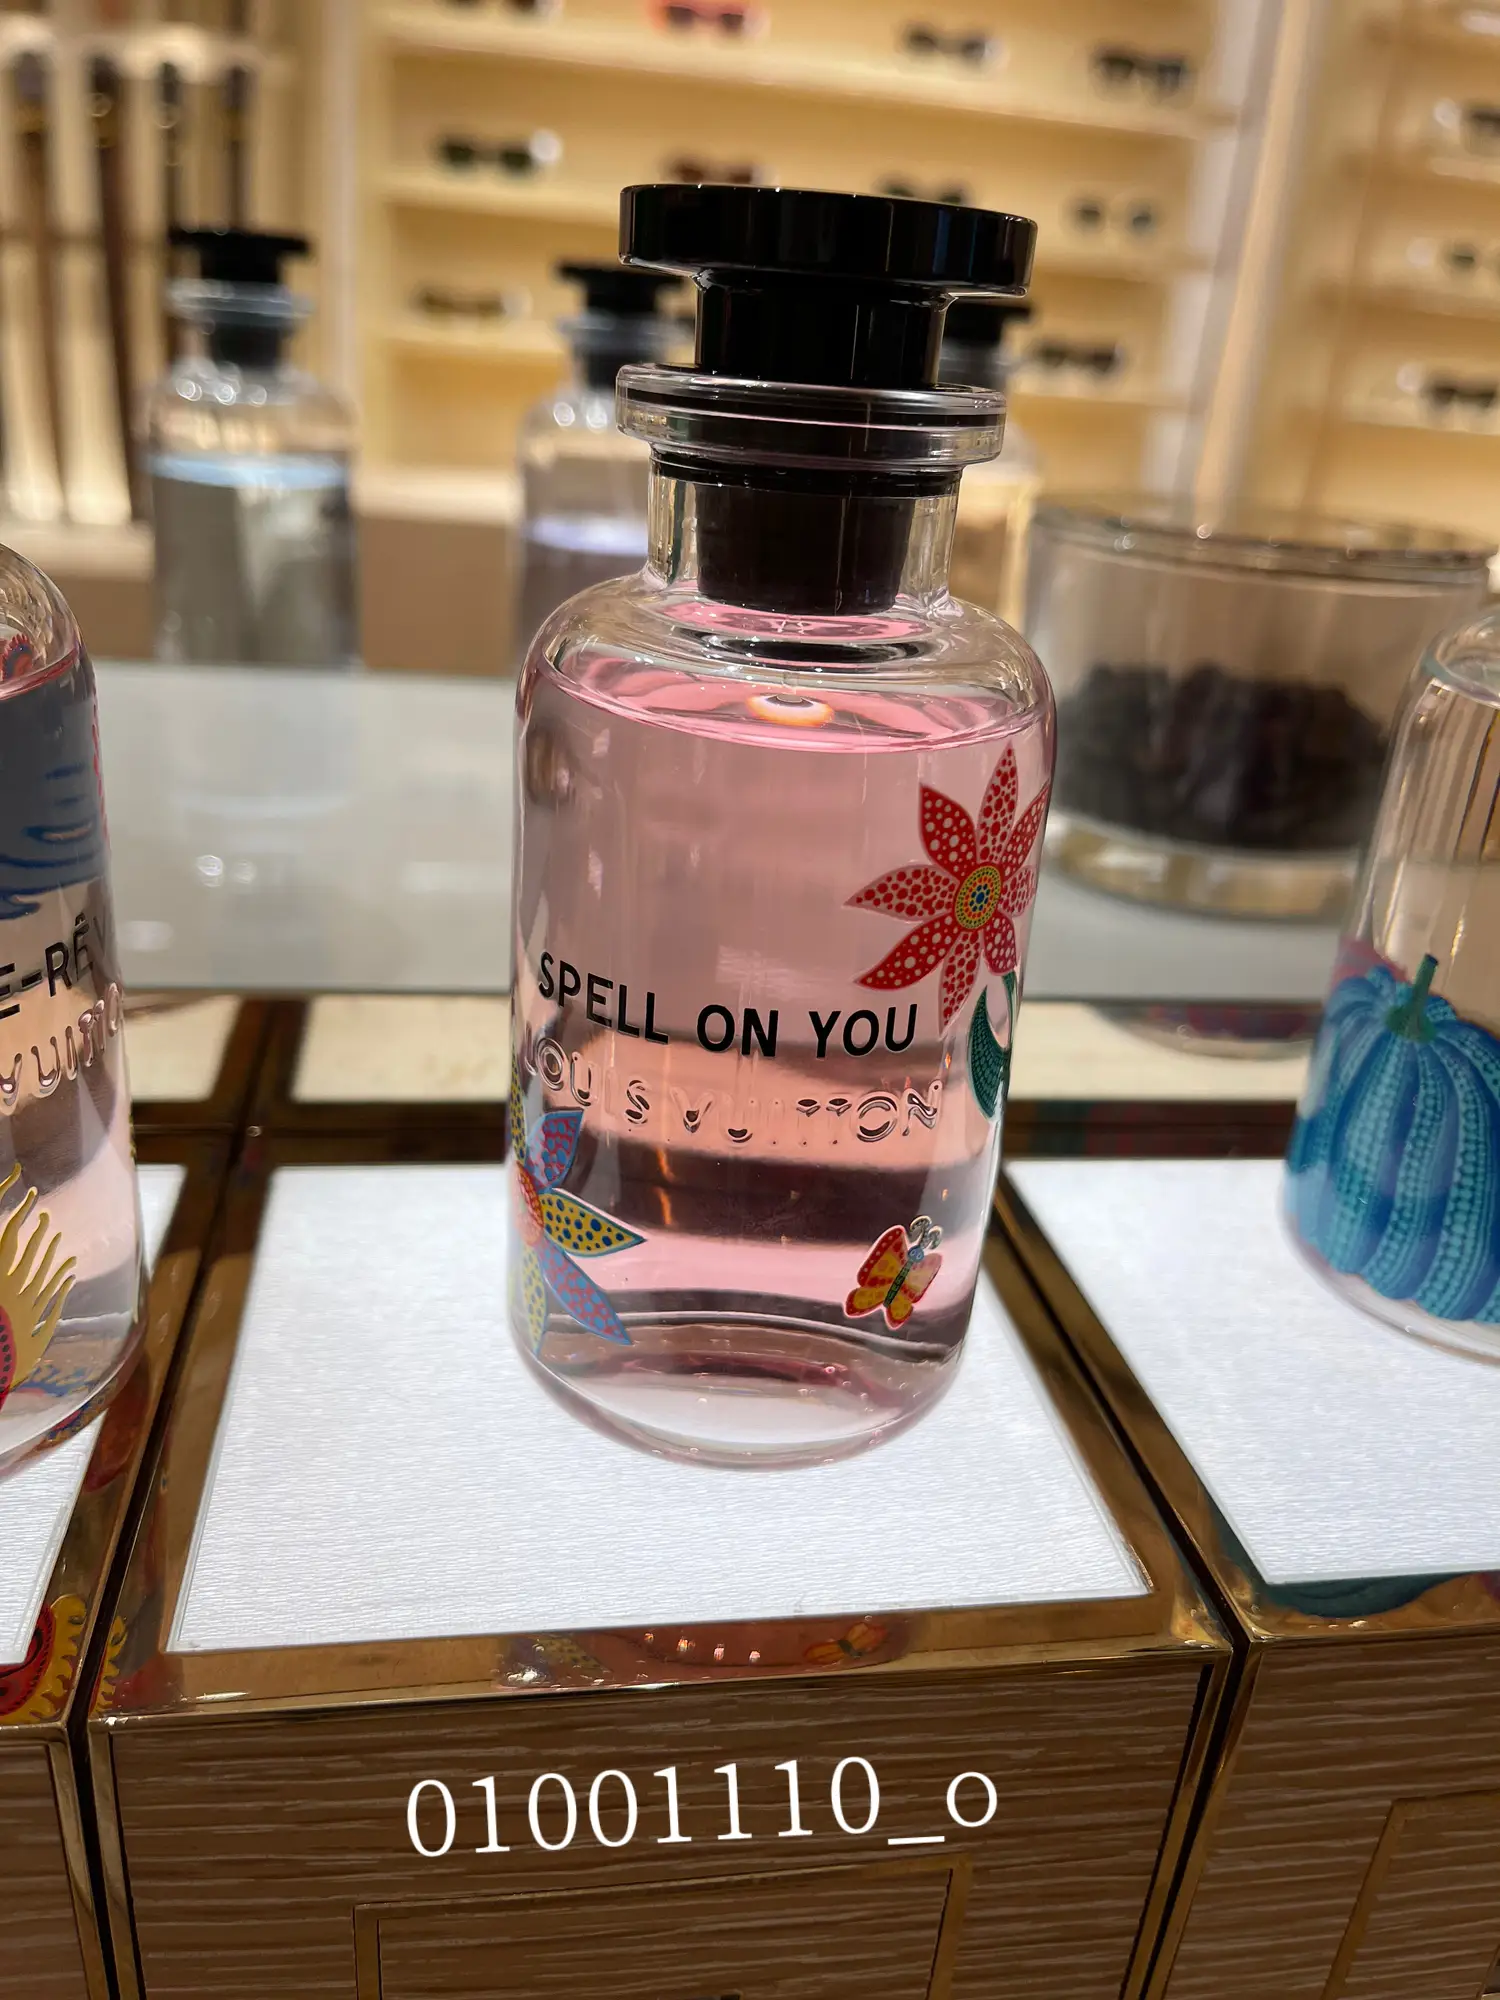 How to get Louis Vuitton perfume refills! #louisvuitton #perfume